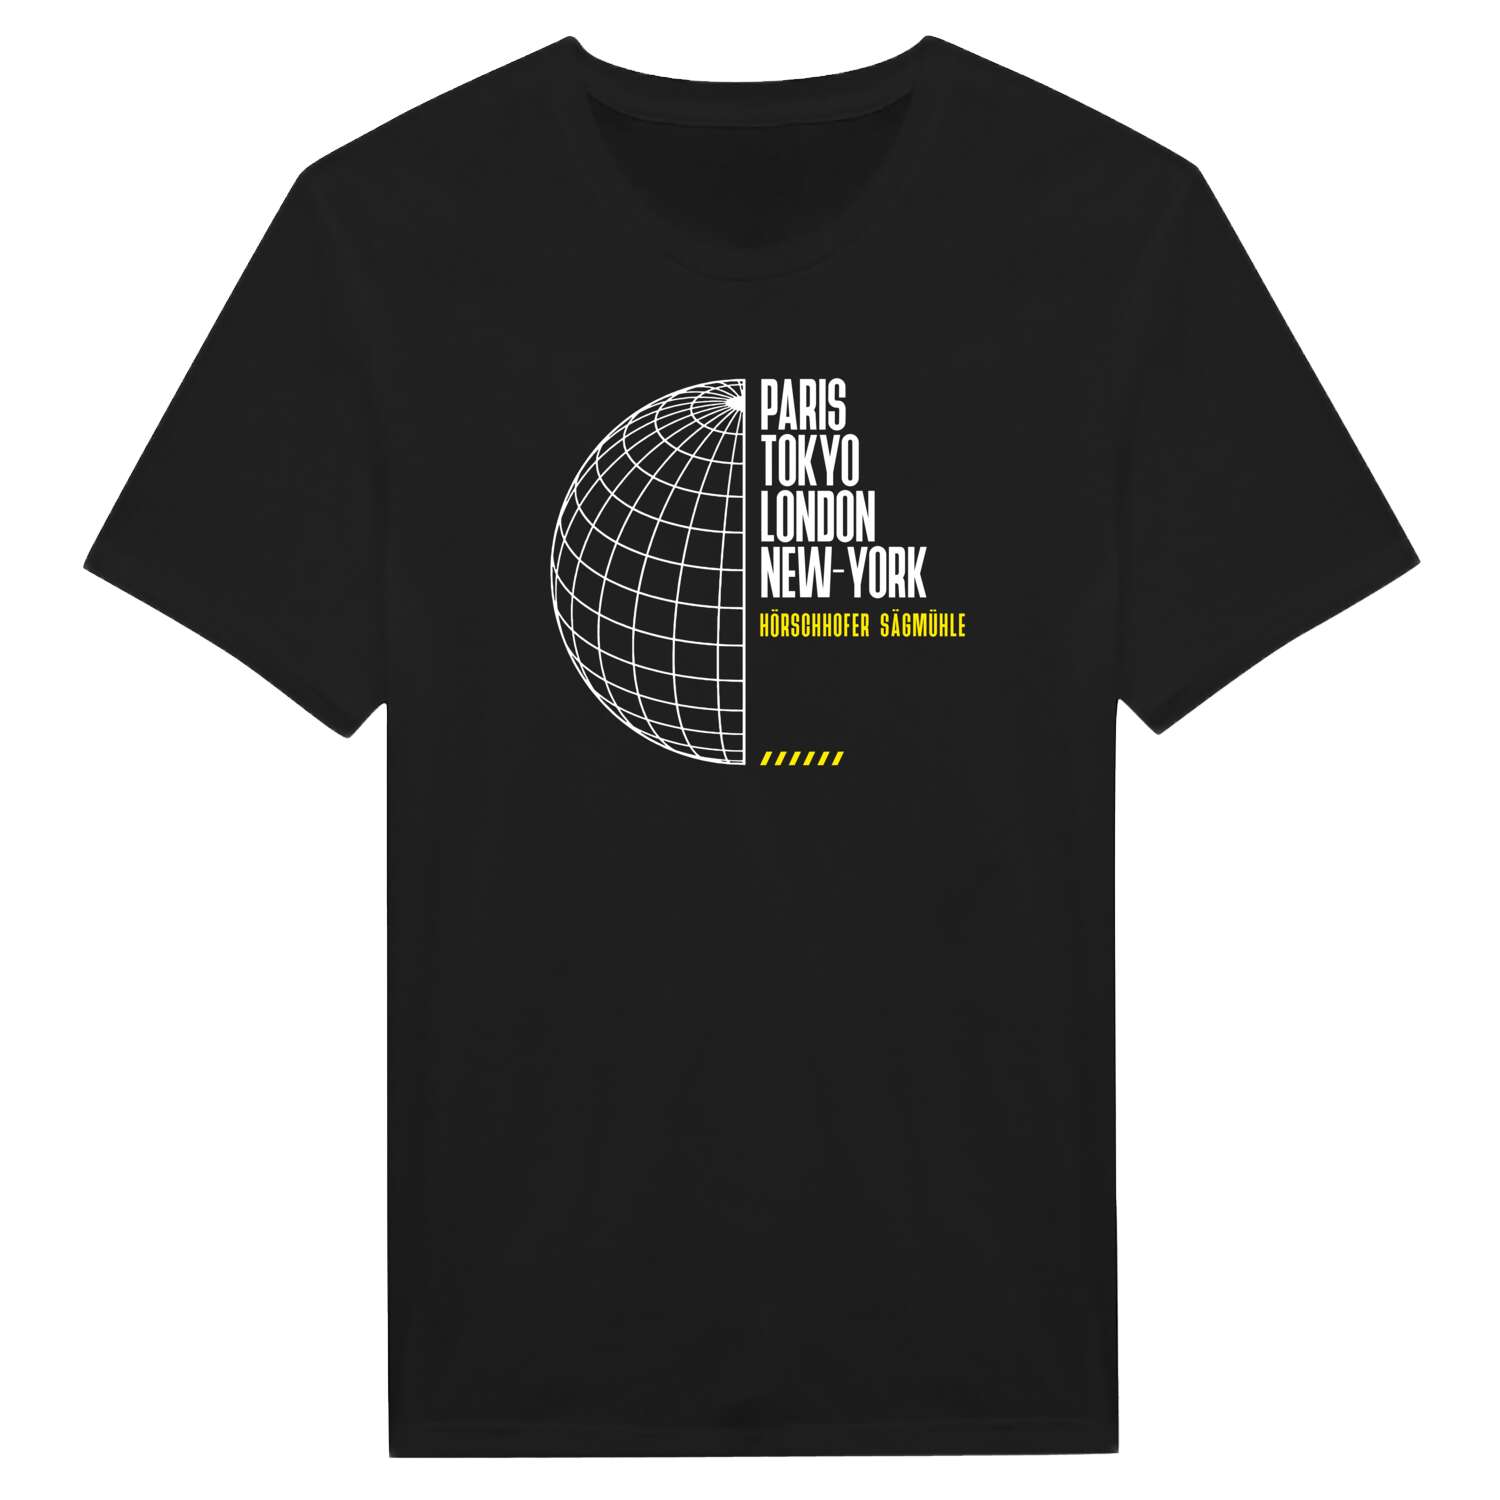 Hörschhofer Sägmühle T-Shirt »Paris Tokyo London«